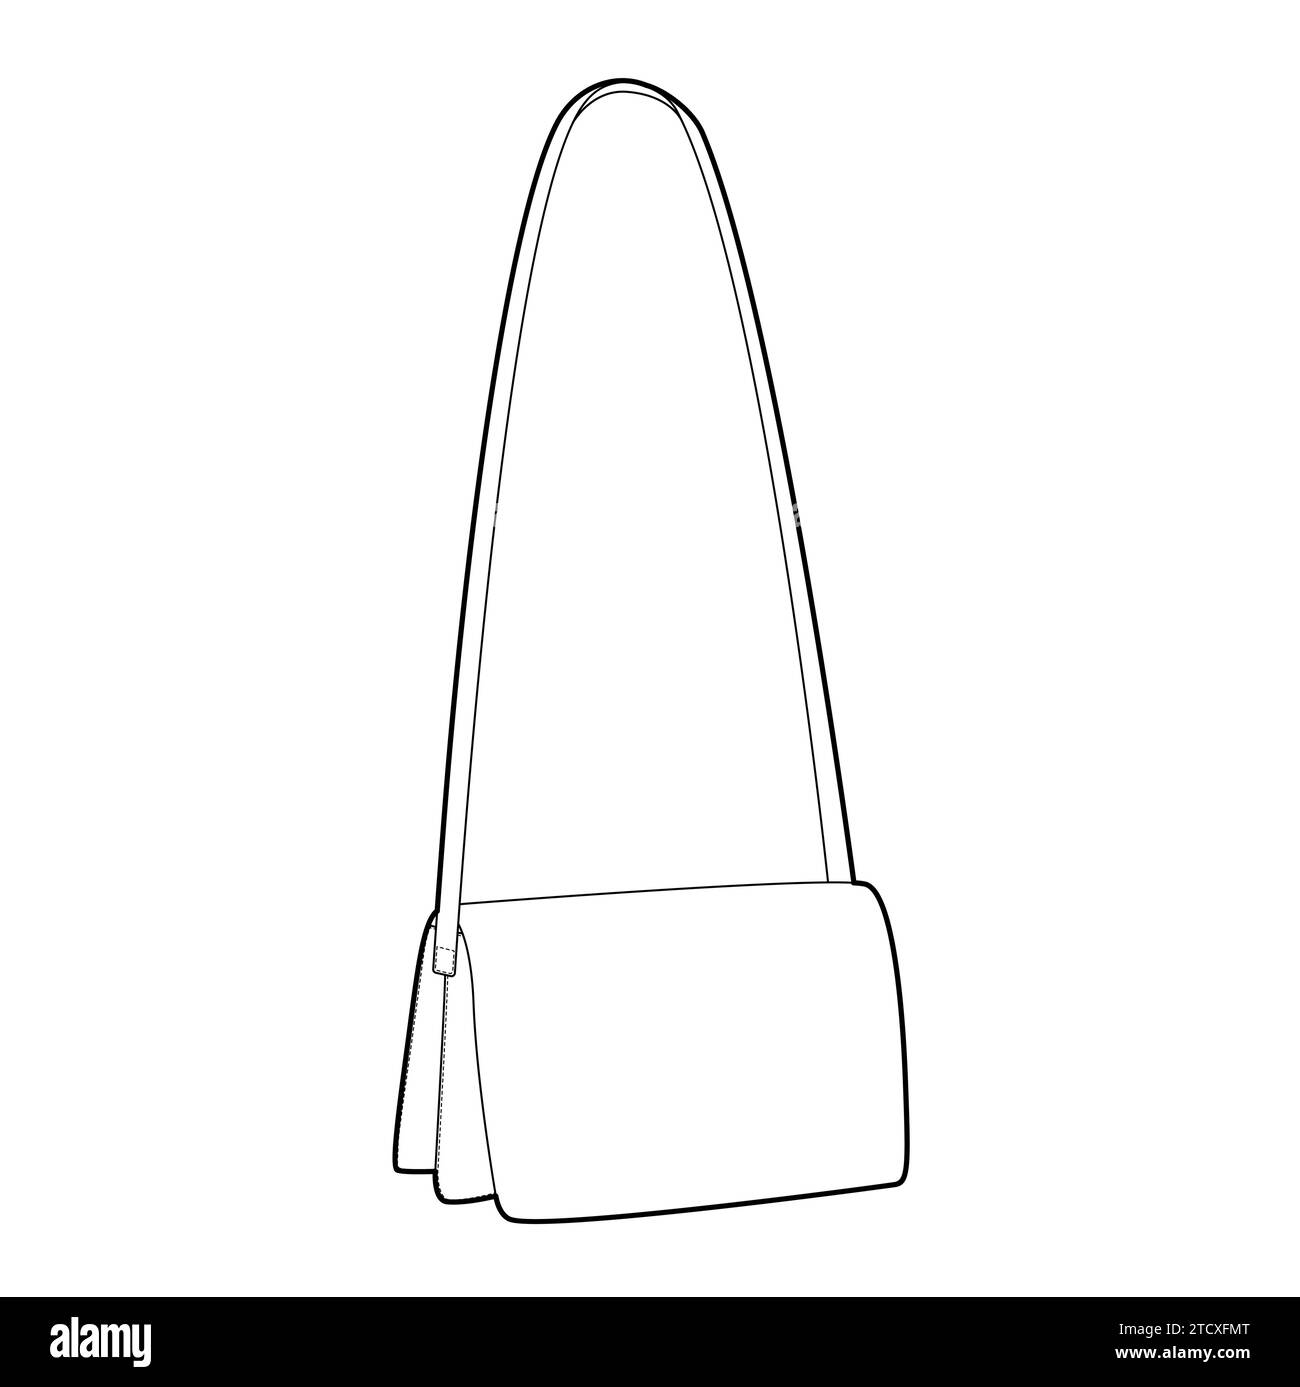 How to draw a School Bag | School Bag Easy Draw Tutorial - YouTube